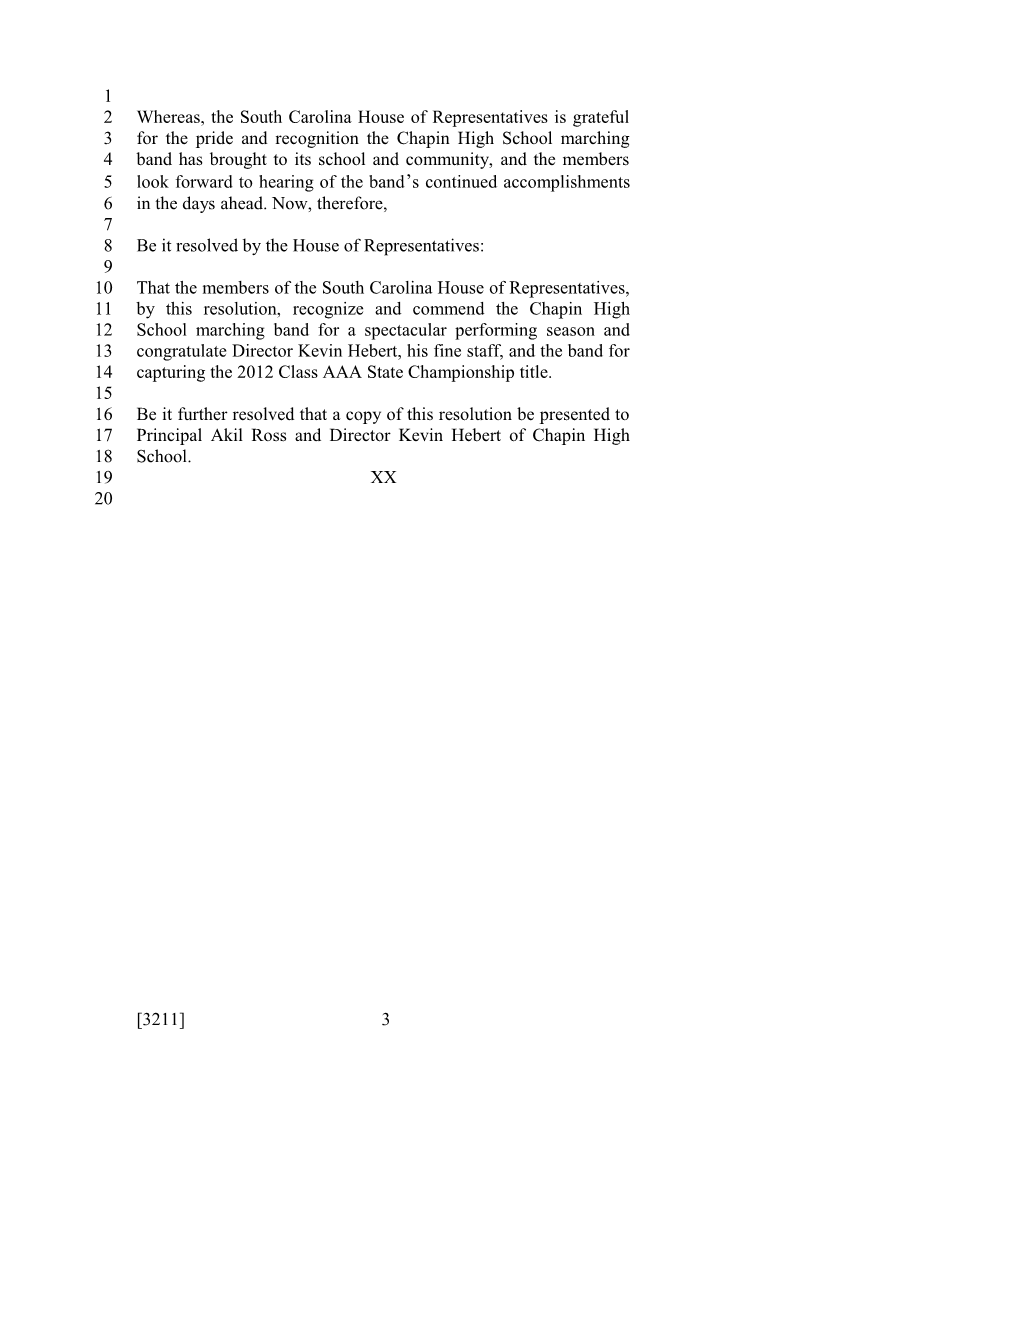 2013-2014 Bill 3211: Chapin High School Marching Band - South Carolina Legislature Online